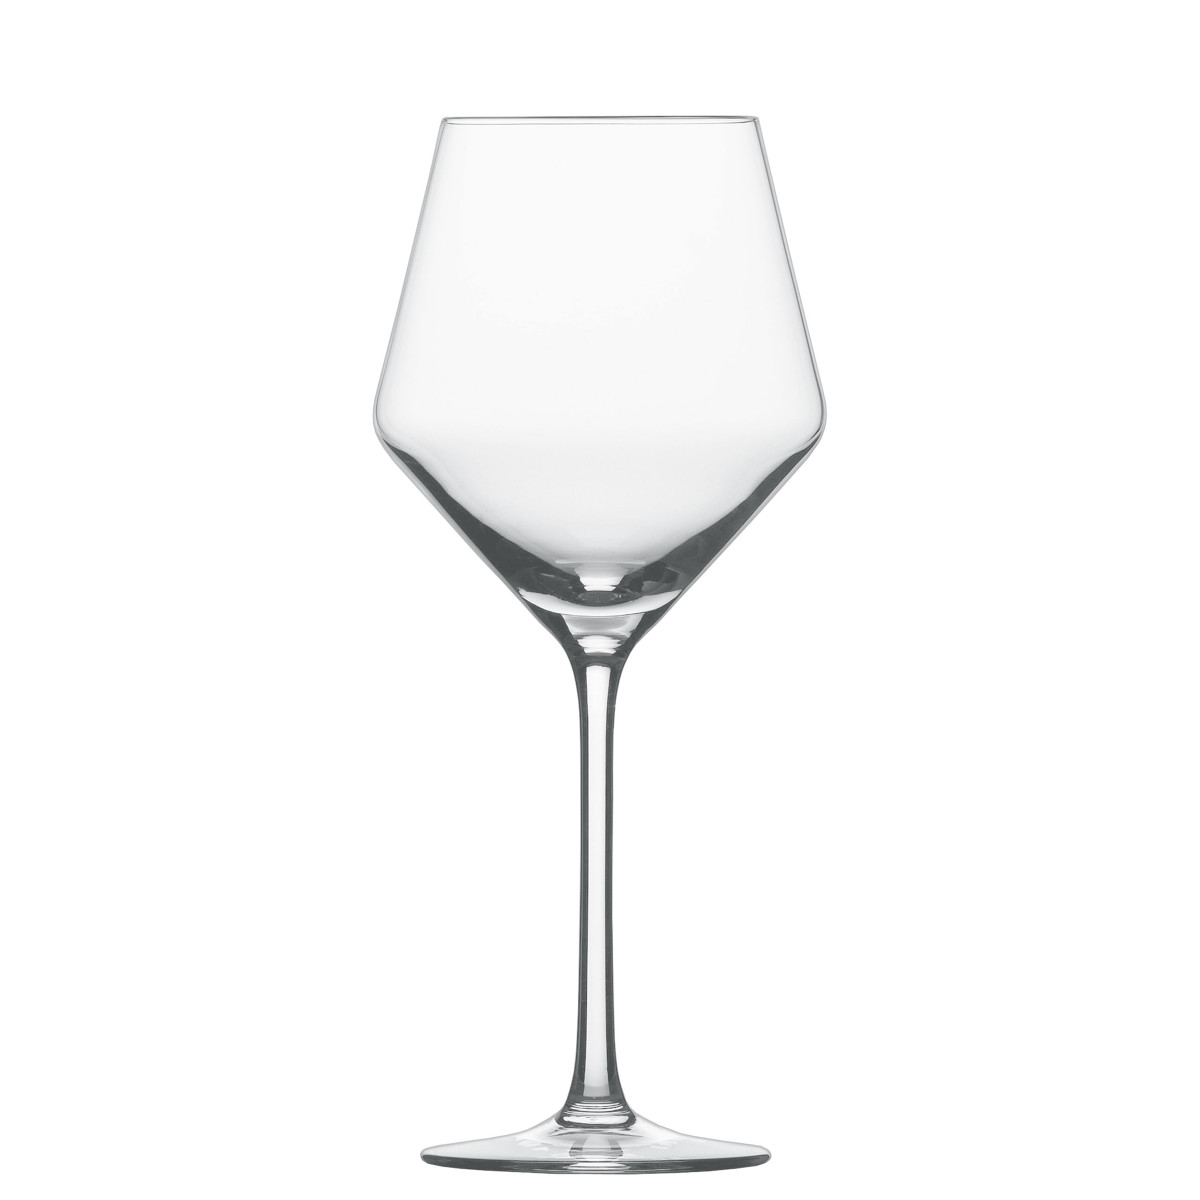 Zwiesel Glas Pure Chardonnay/Beaujolais, Set of 4